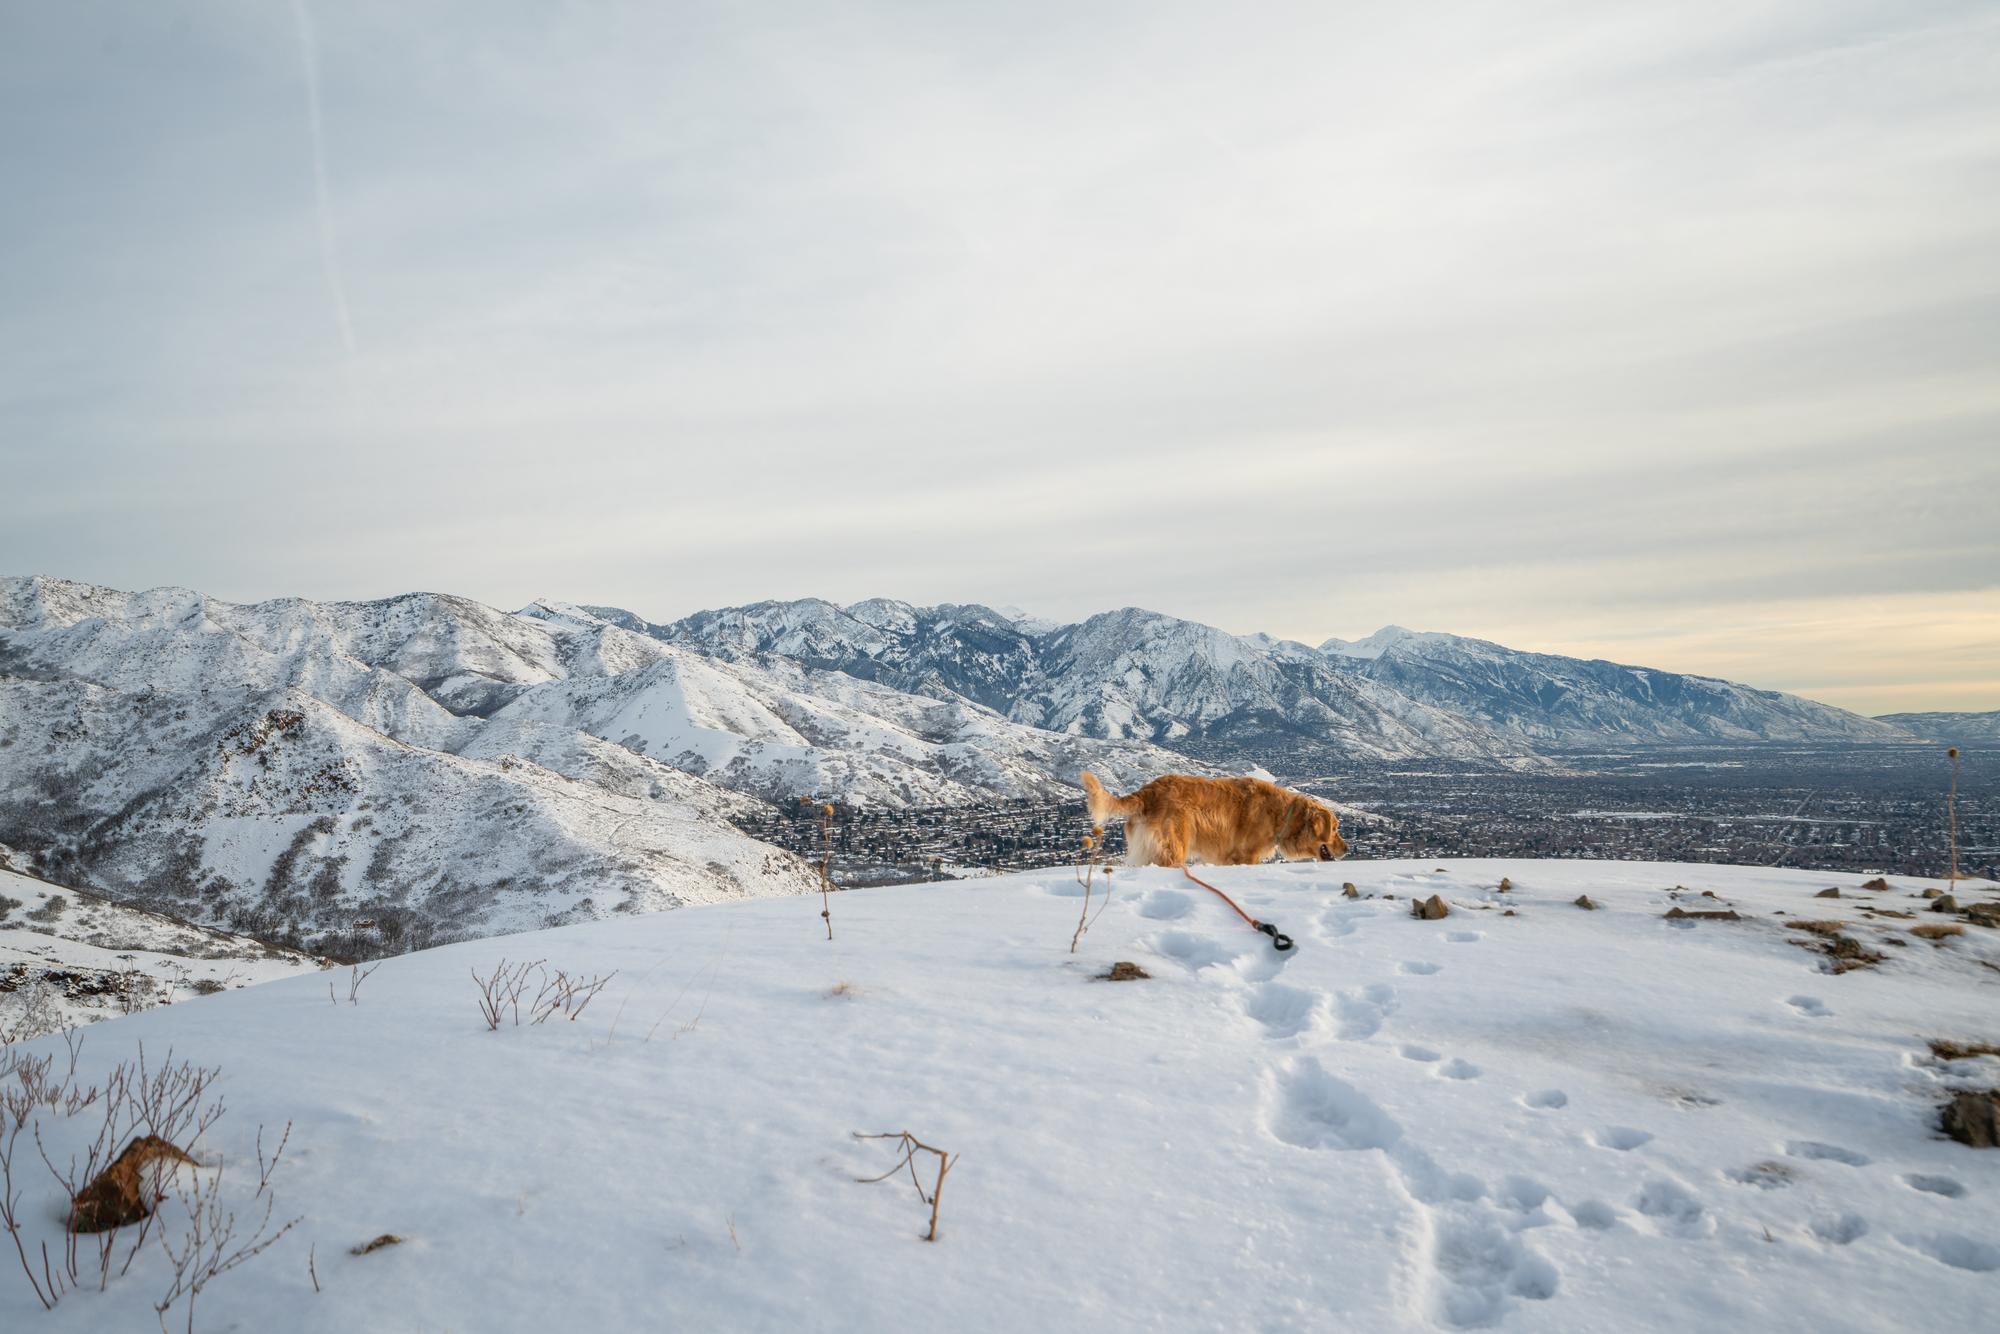 Dog on hill overlooking Salt Lake City on the Mount Van Cott trail.